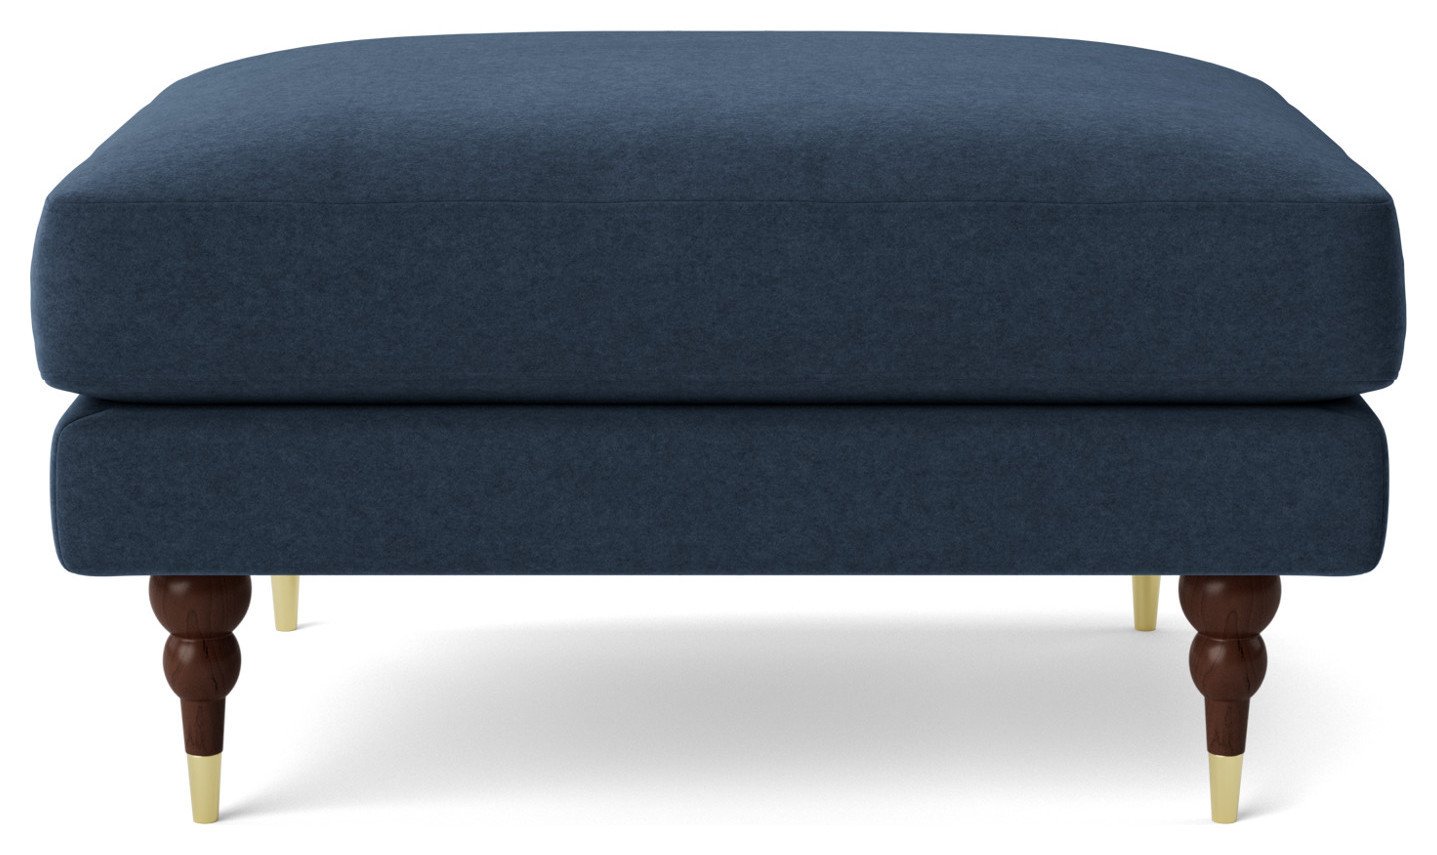 Swoon Charlbury Fabric Ottoman Footstool - Indigo Blue